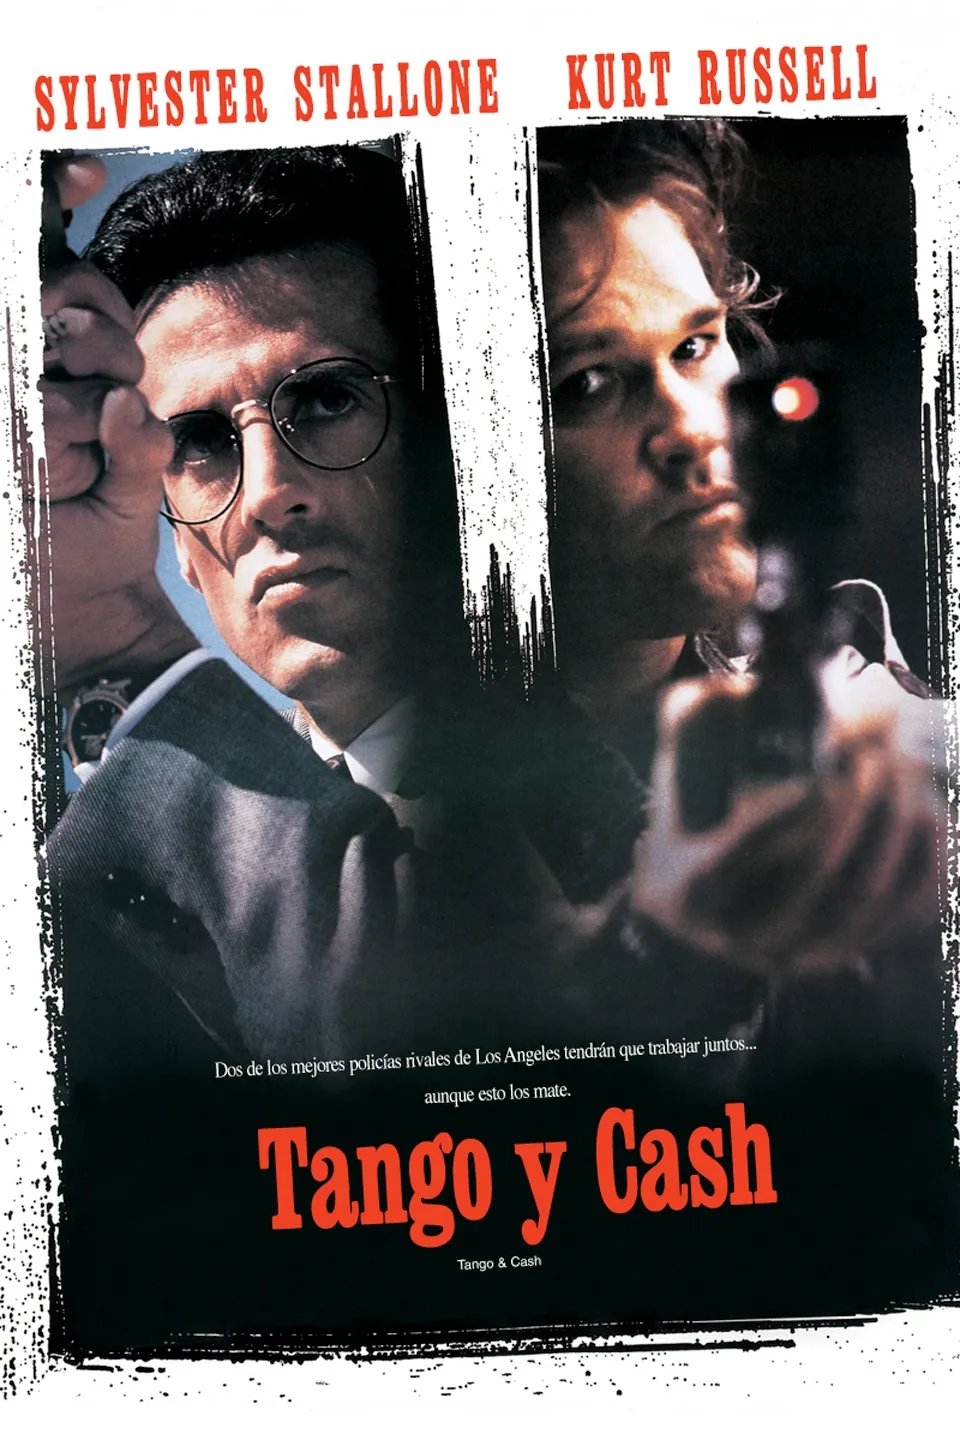 ¿Qué pasó con Kurt Russell, inseparable de Sylvester Stallone en Tango y Cash?